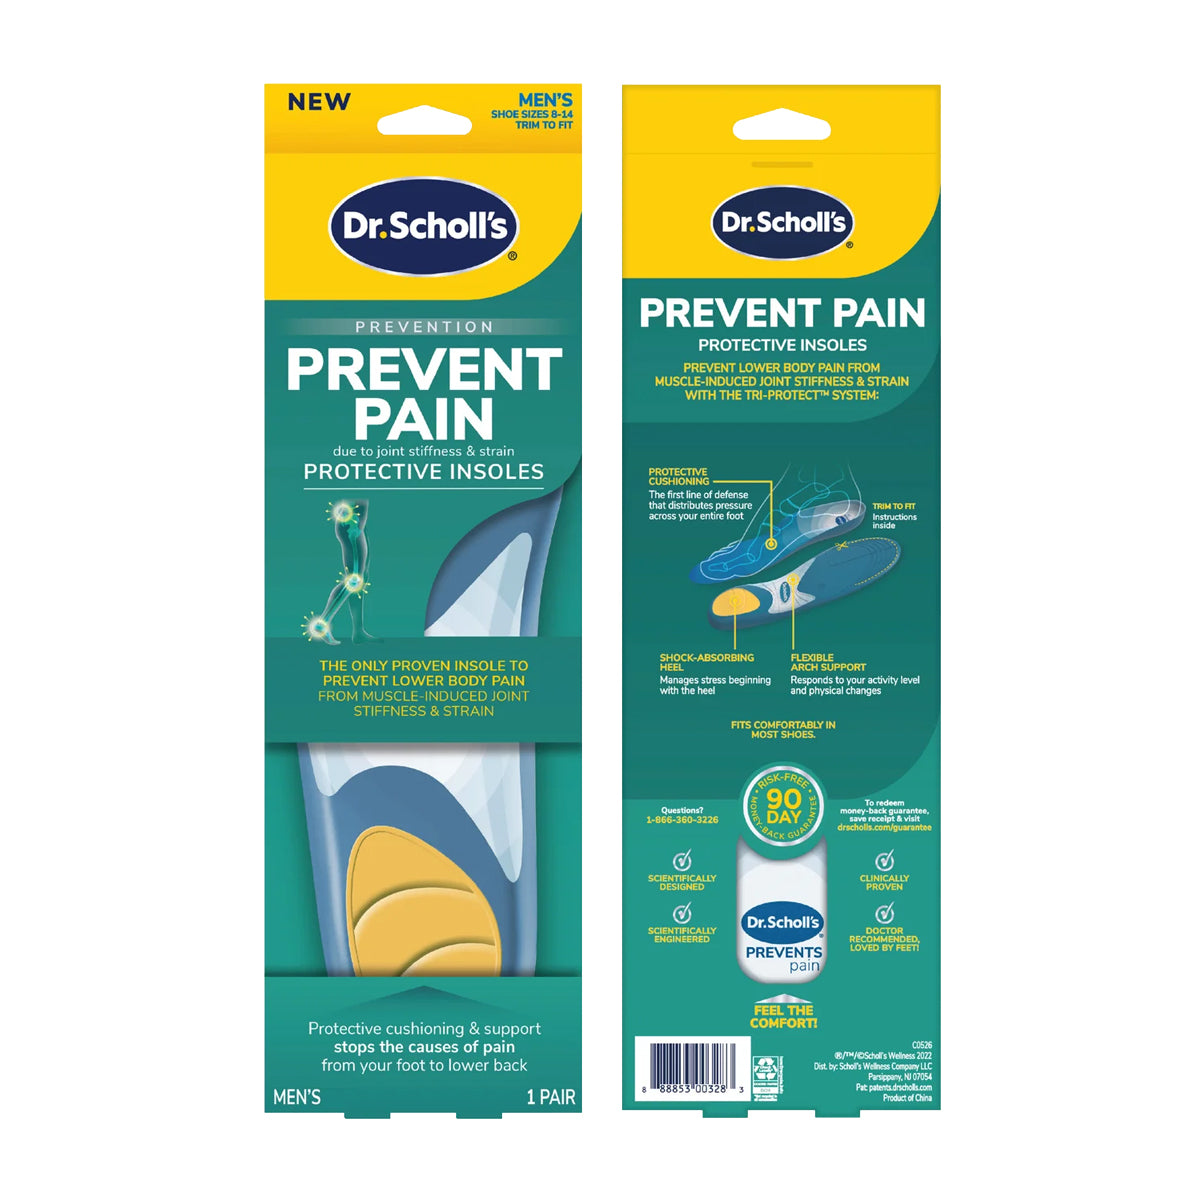 Dr.Scholl's Prevention Prevent Pain Protective Insoles